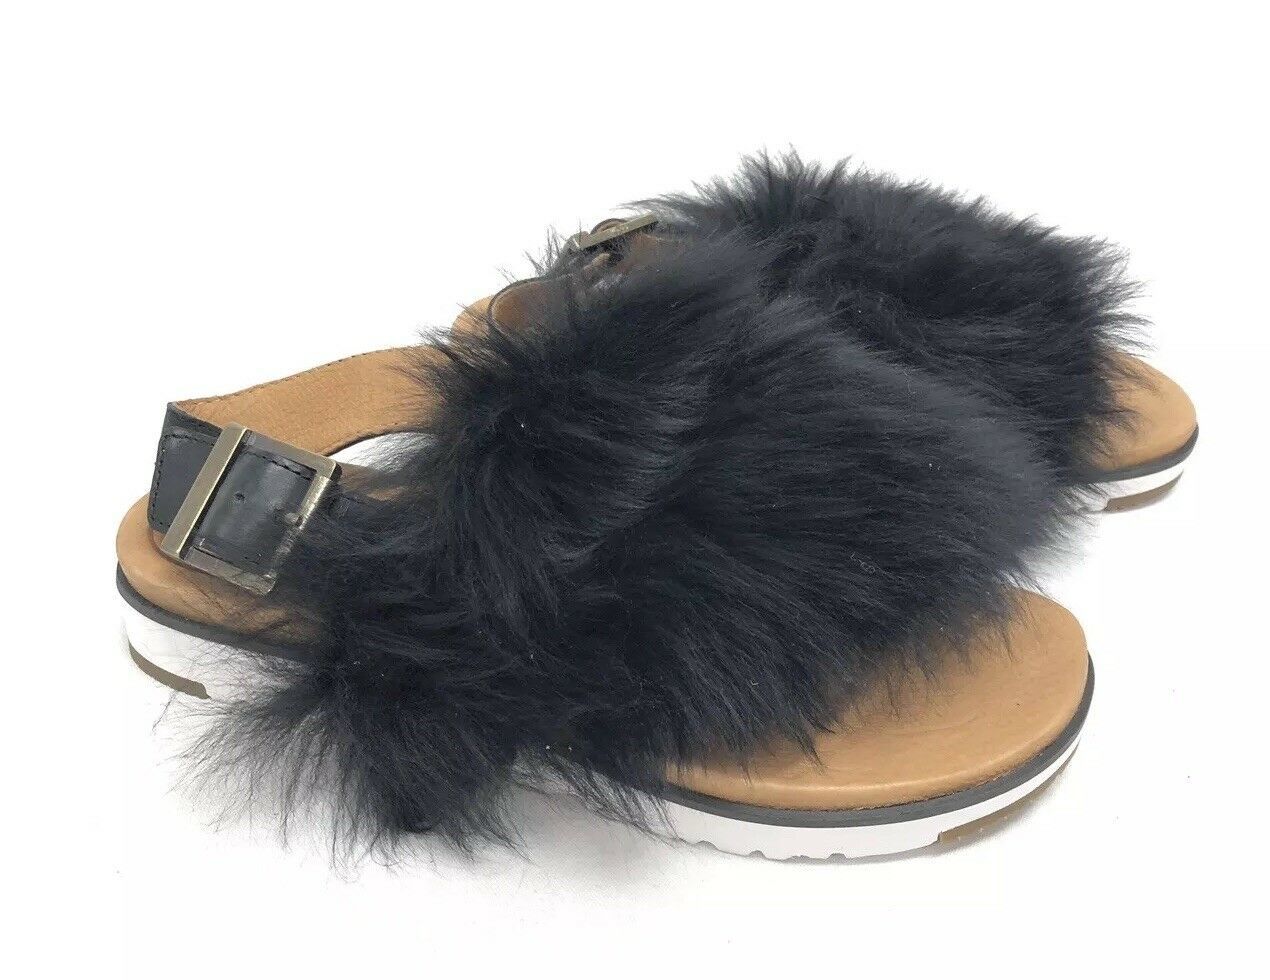 Ugg Australia Holly Black 1019870 Casual Fashion Fur Strappy Sandal Shoe women 6 - $99.99